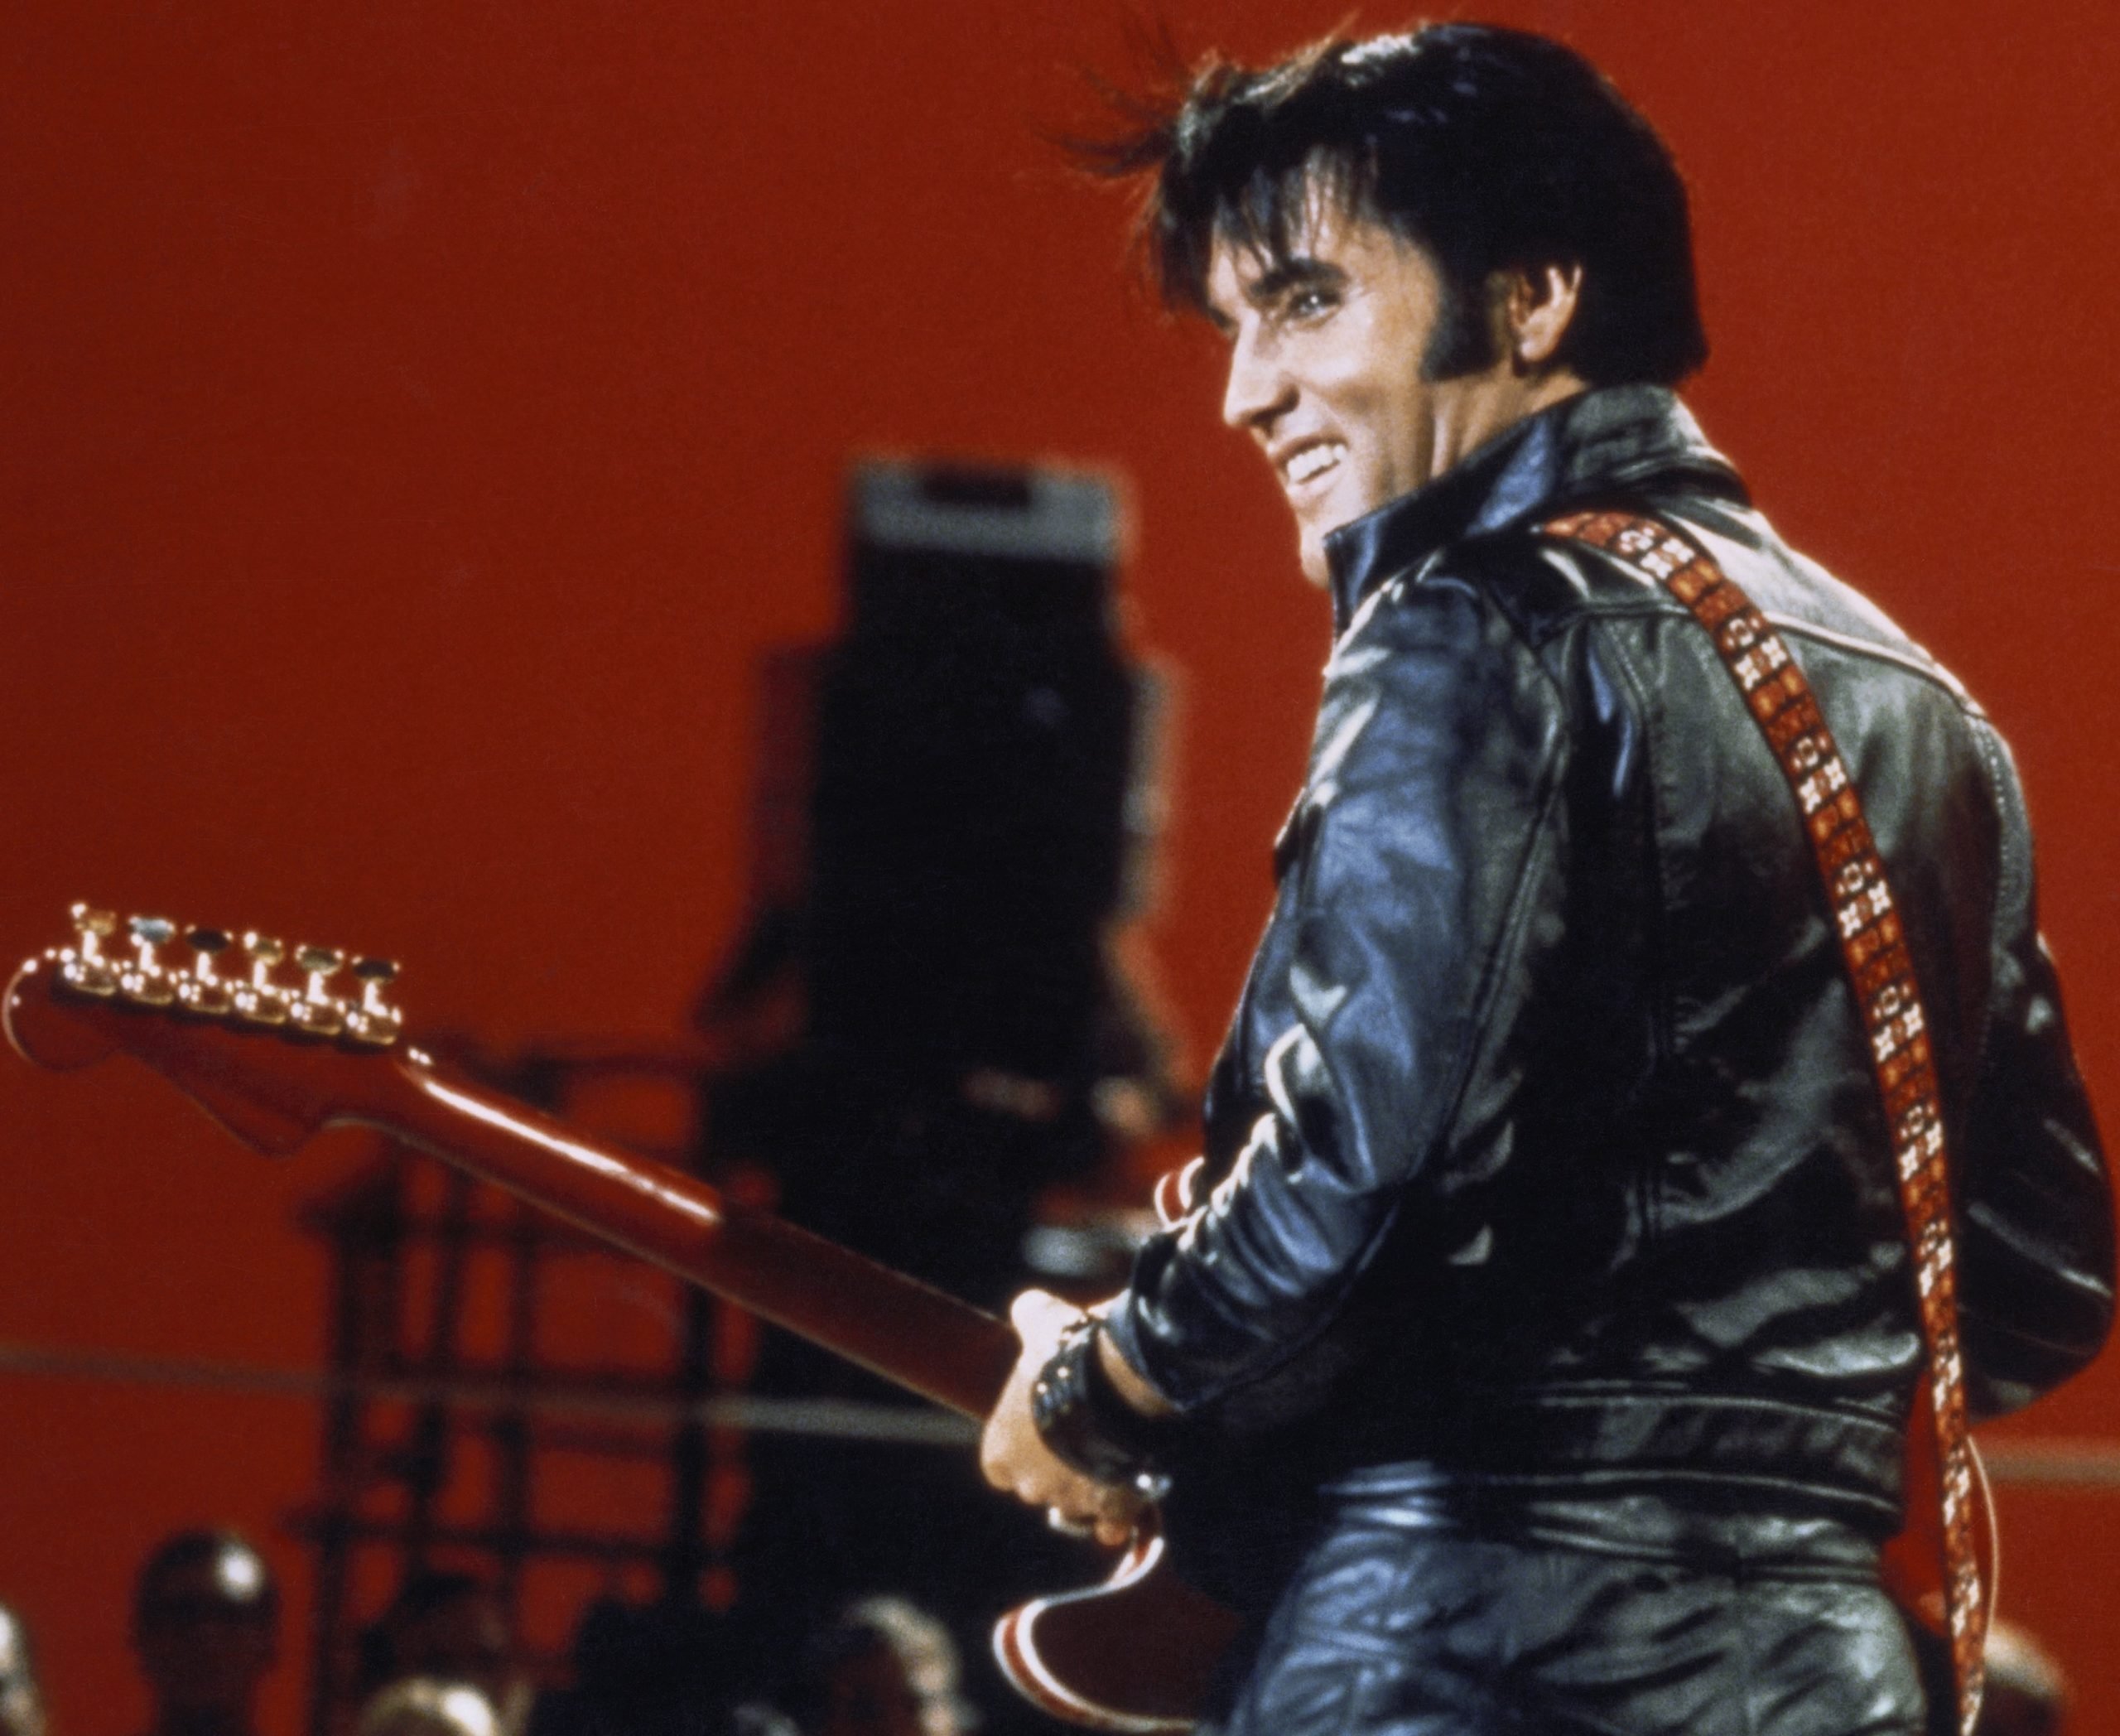 "It's Now or Never" singer Elvis Presley holding a guitar